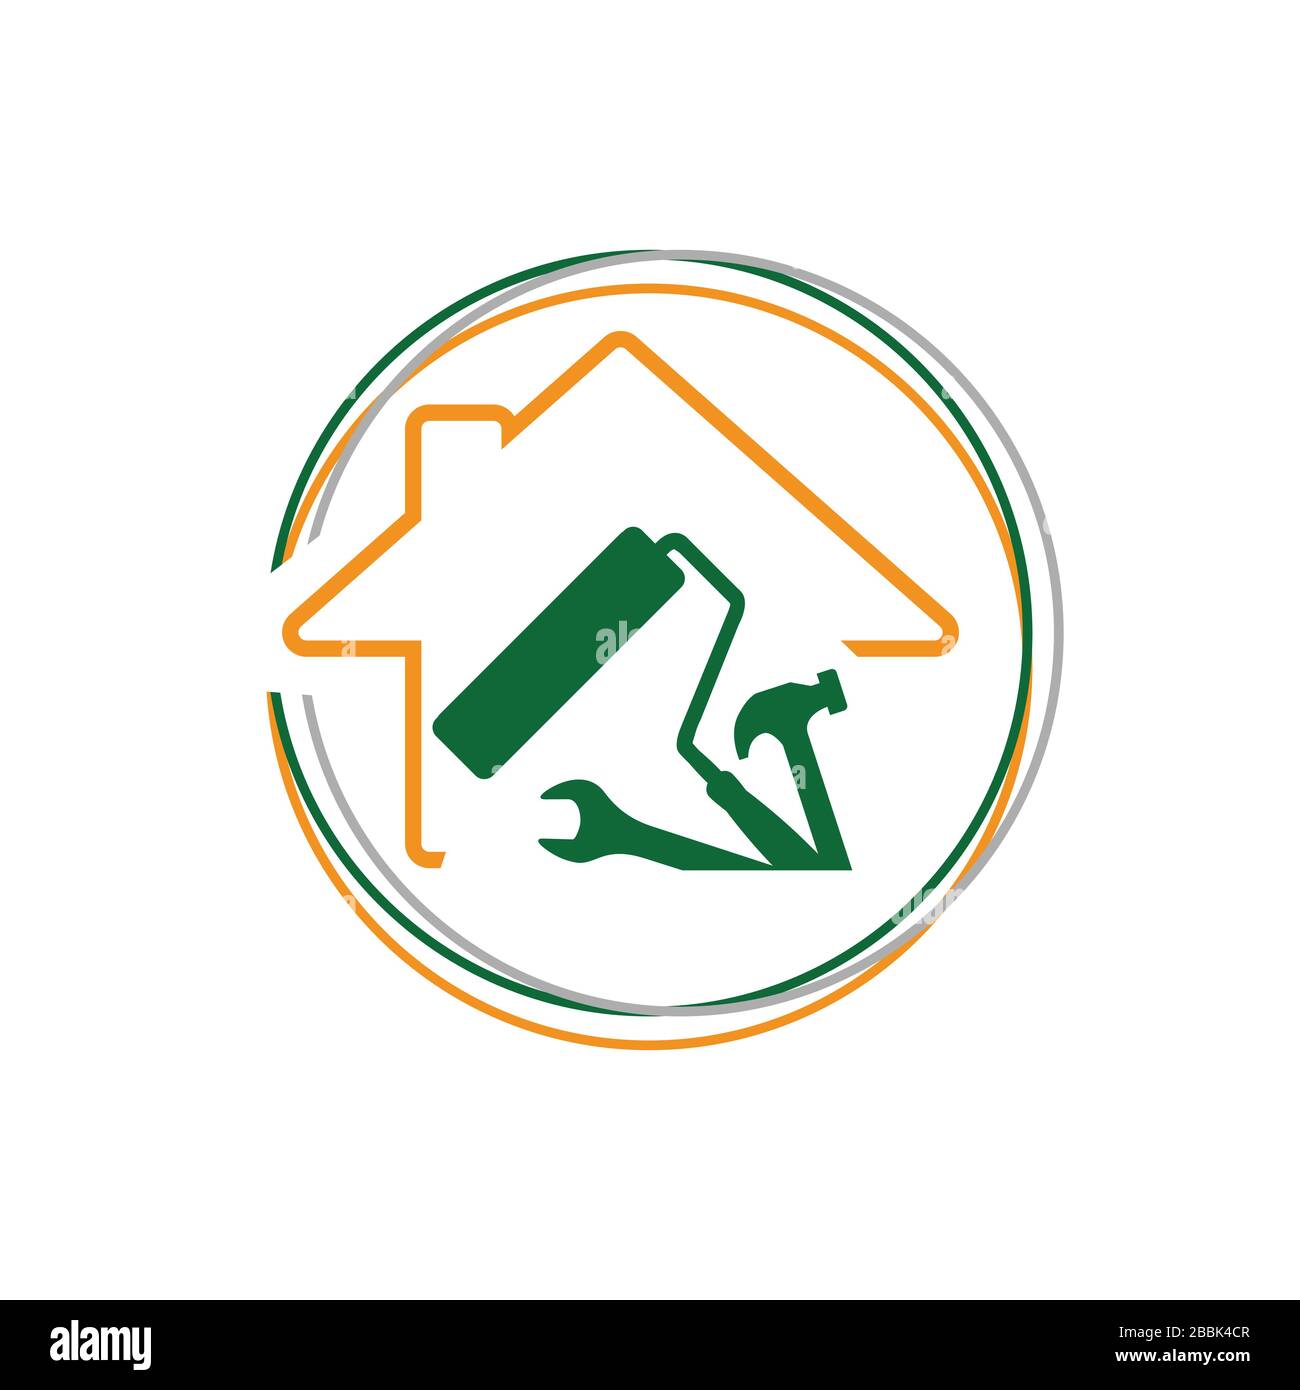 Großartige Hauswartung Umbau Home Renovierung Logo Design Vektor-Illustrationen Stock Vektor